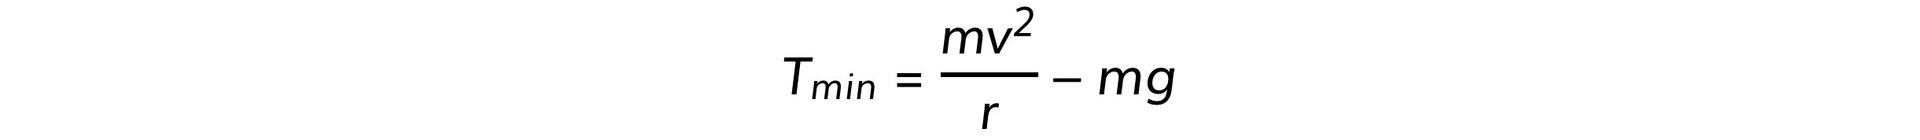 6.1.4-Equation-5